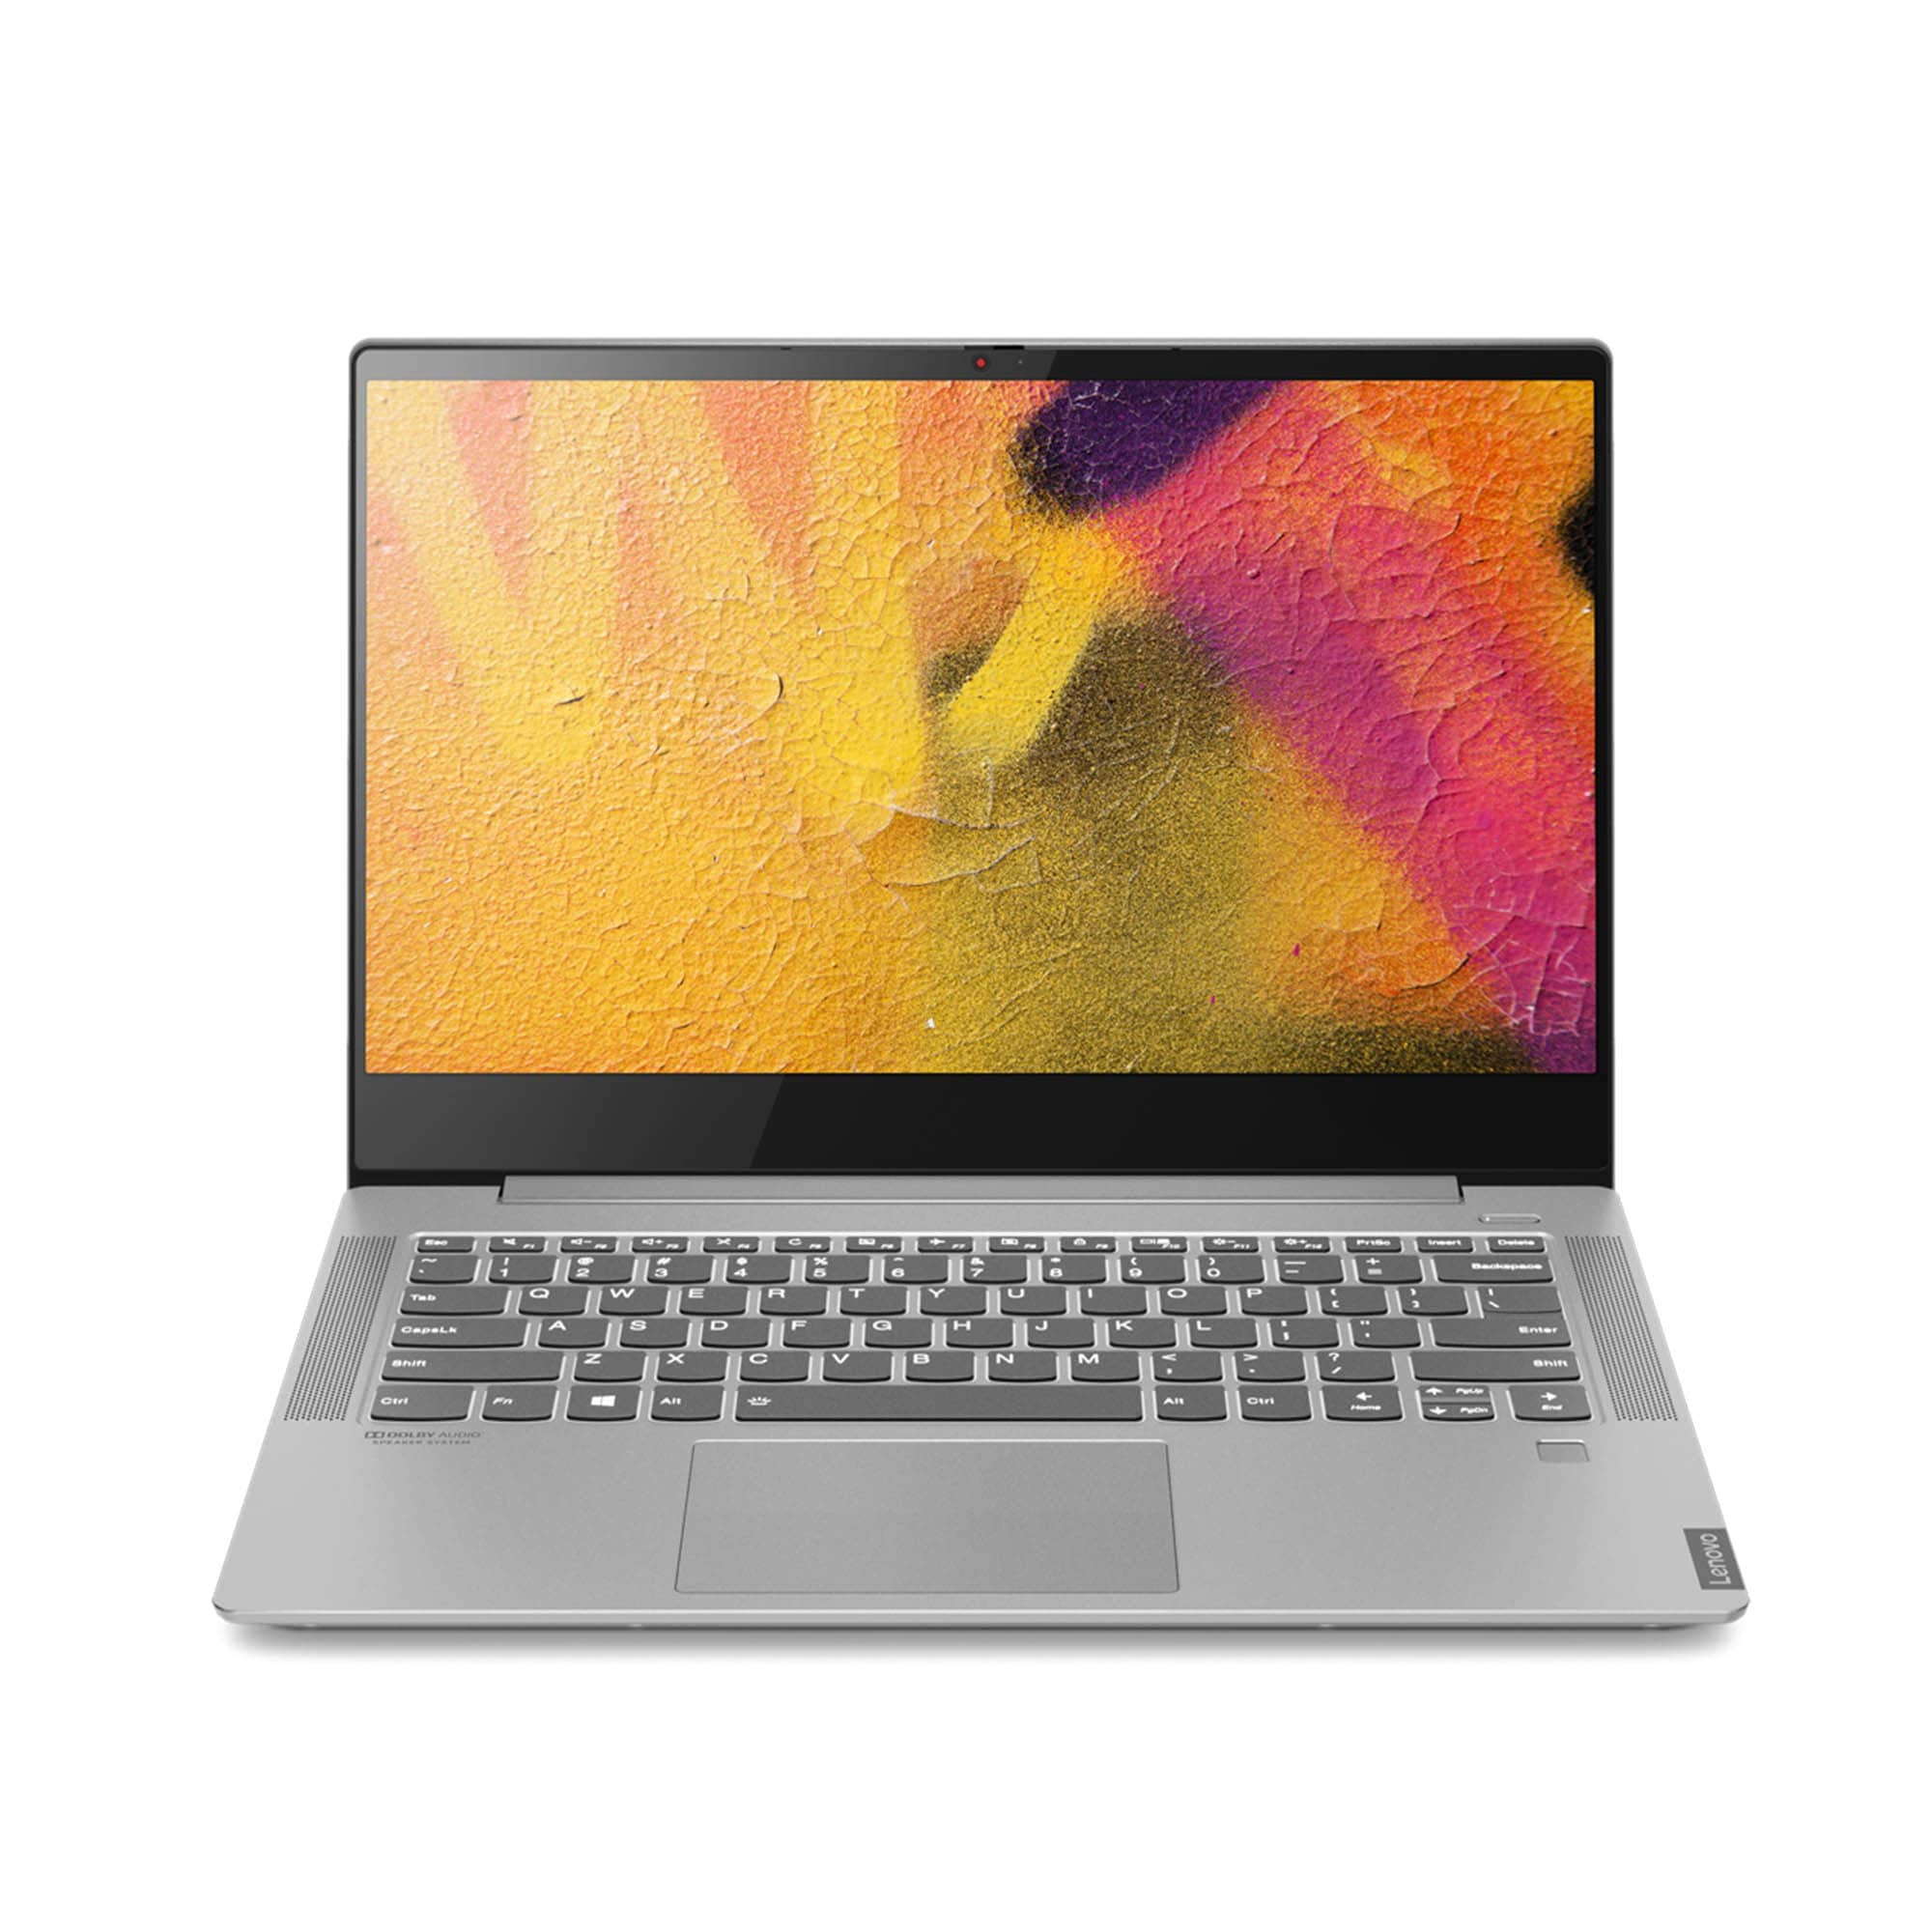 Lenovo ideapad S540-14IWL Touch Laptop, 14.0